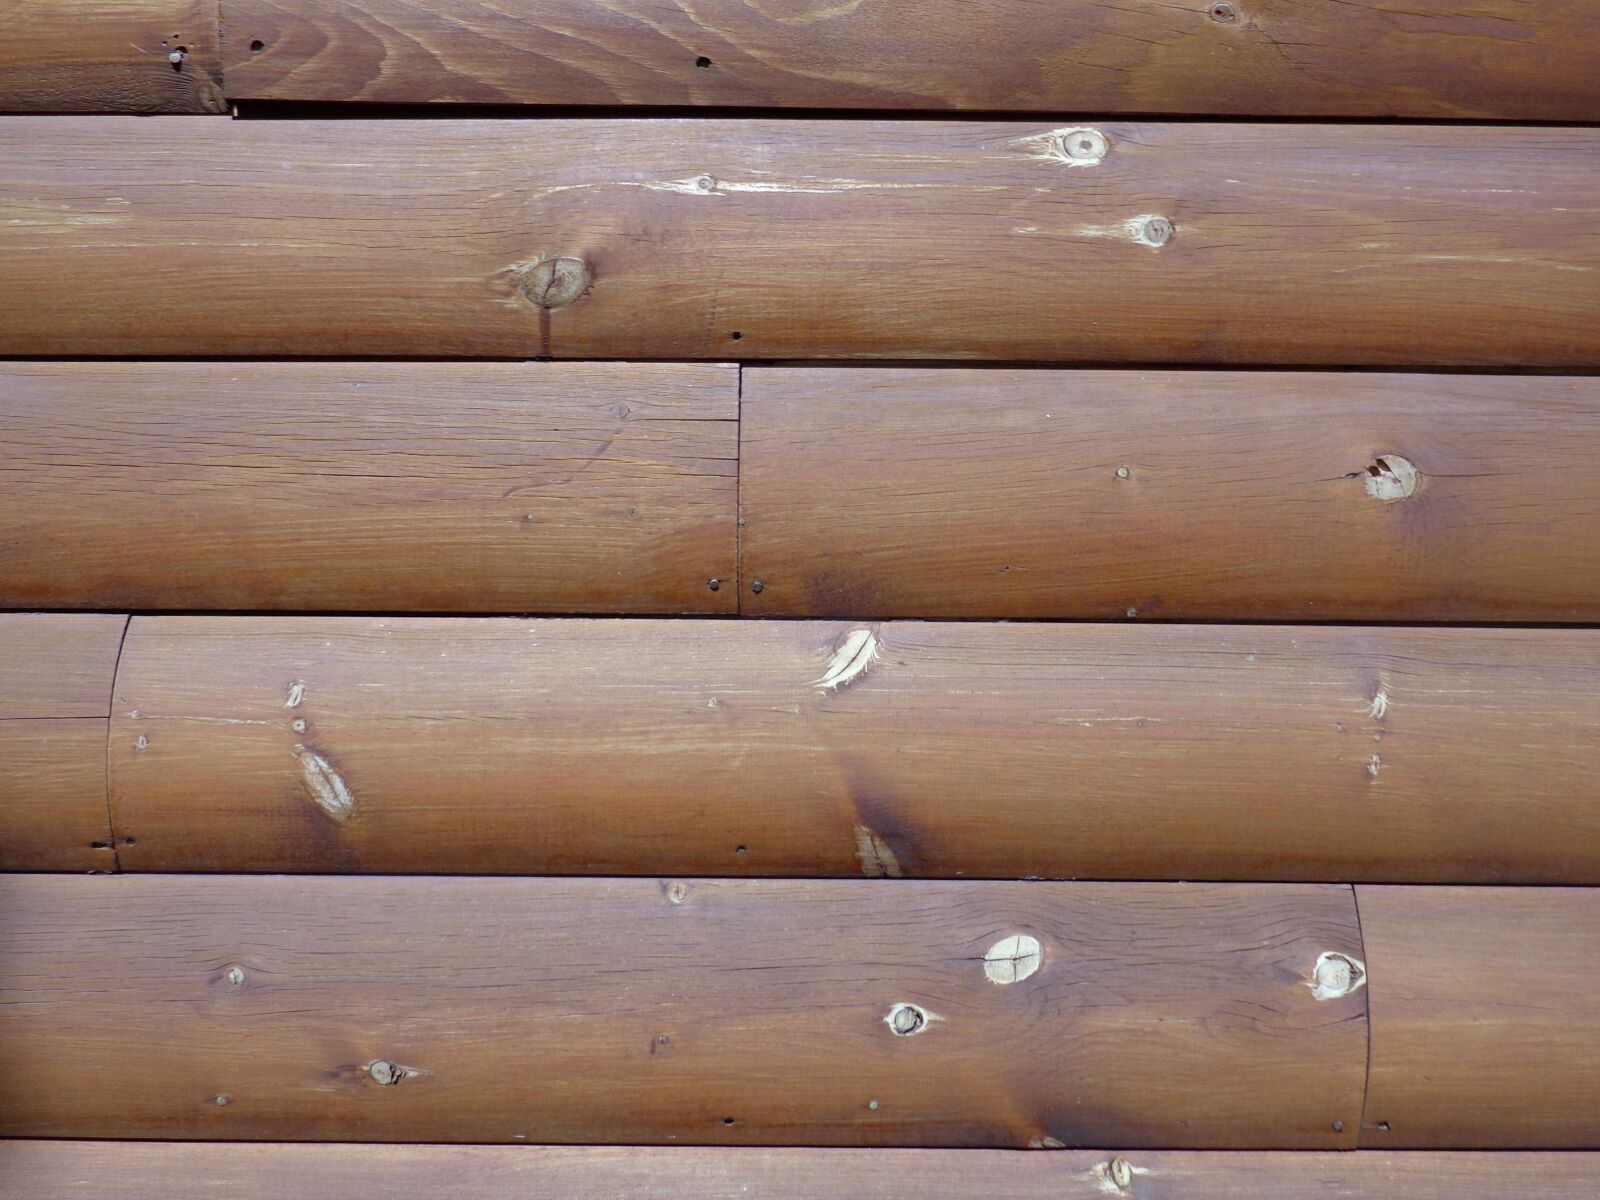 Sony DSC-W690 sample photo. "Wooden planks, log wood" photography